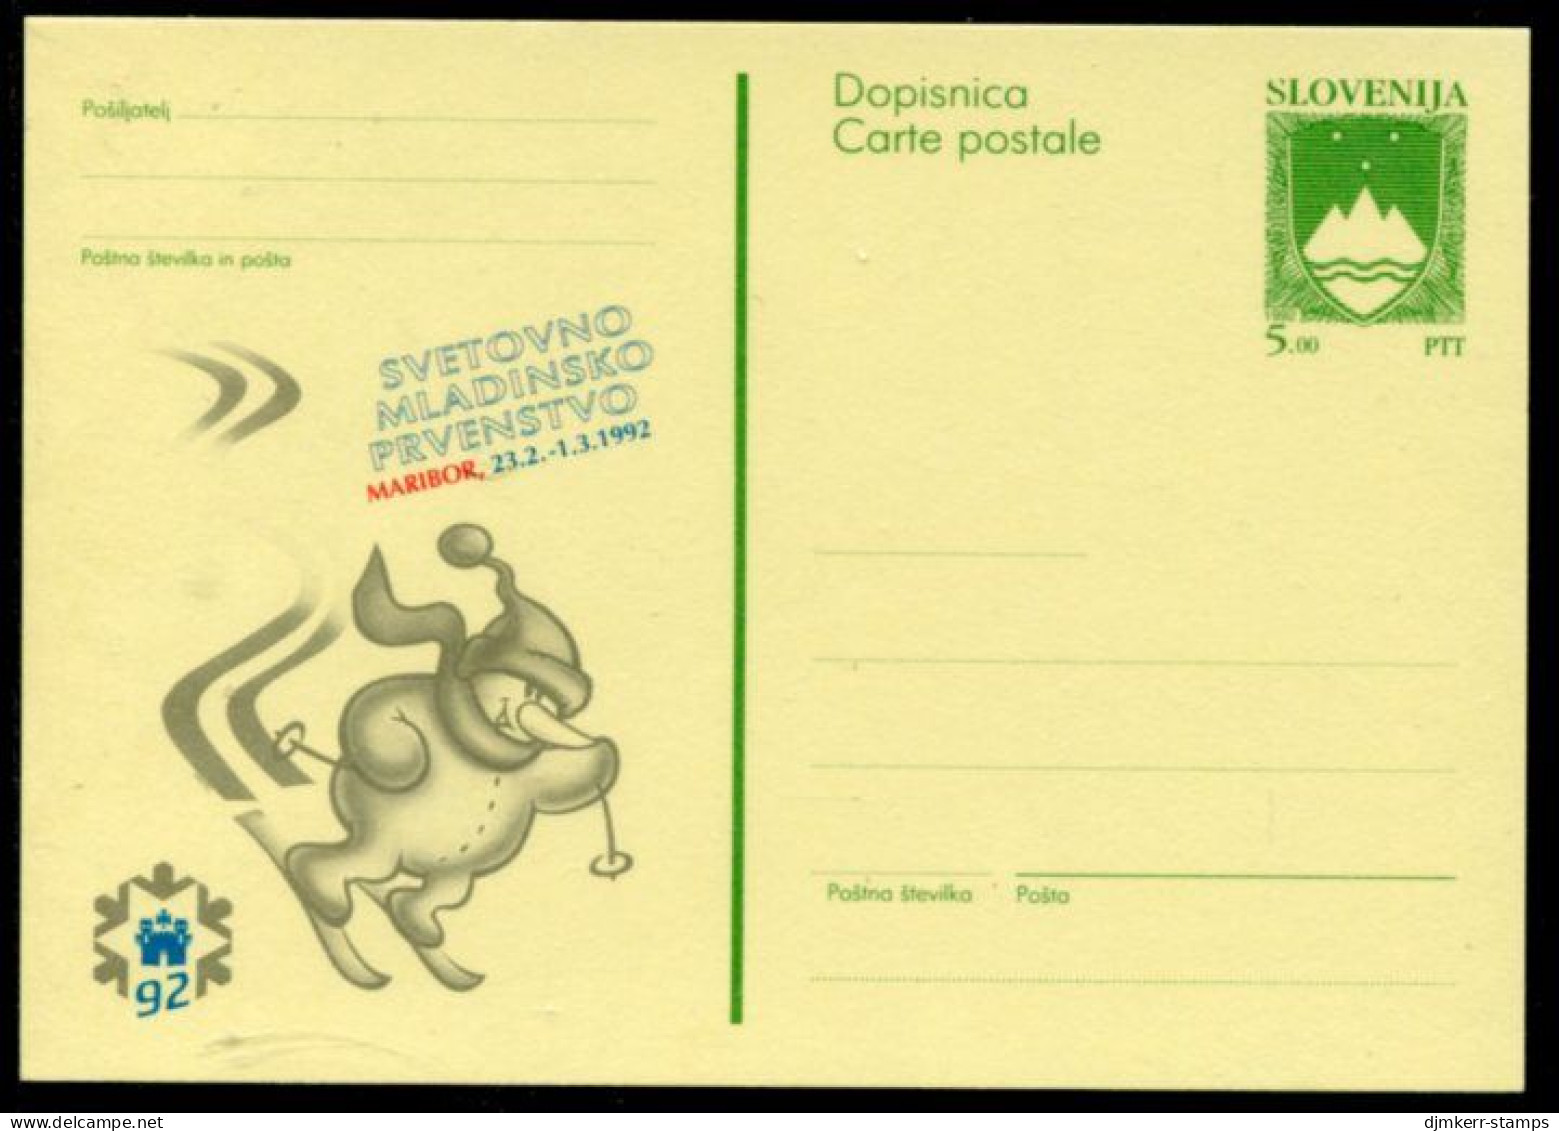 SLOVENIA 1992 5.00 T.  Junior Ski  World Championships Stationery Card, Unused.   Michel P2 - Slovénie